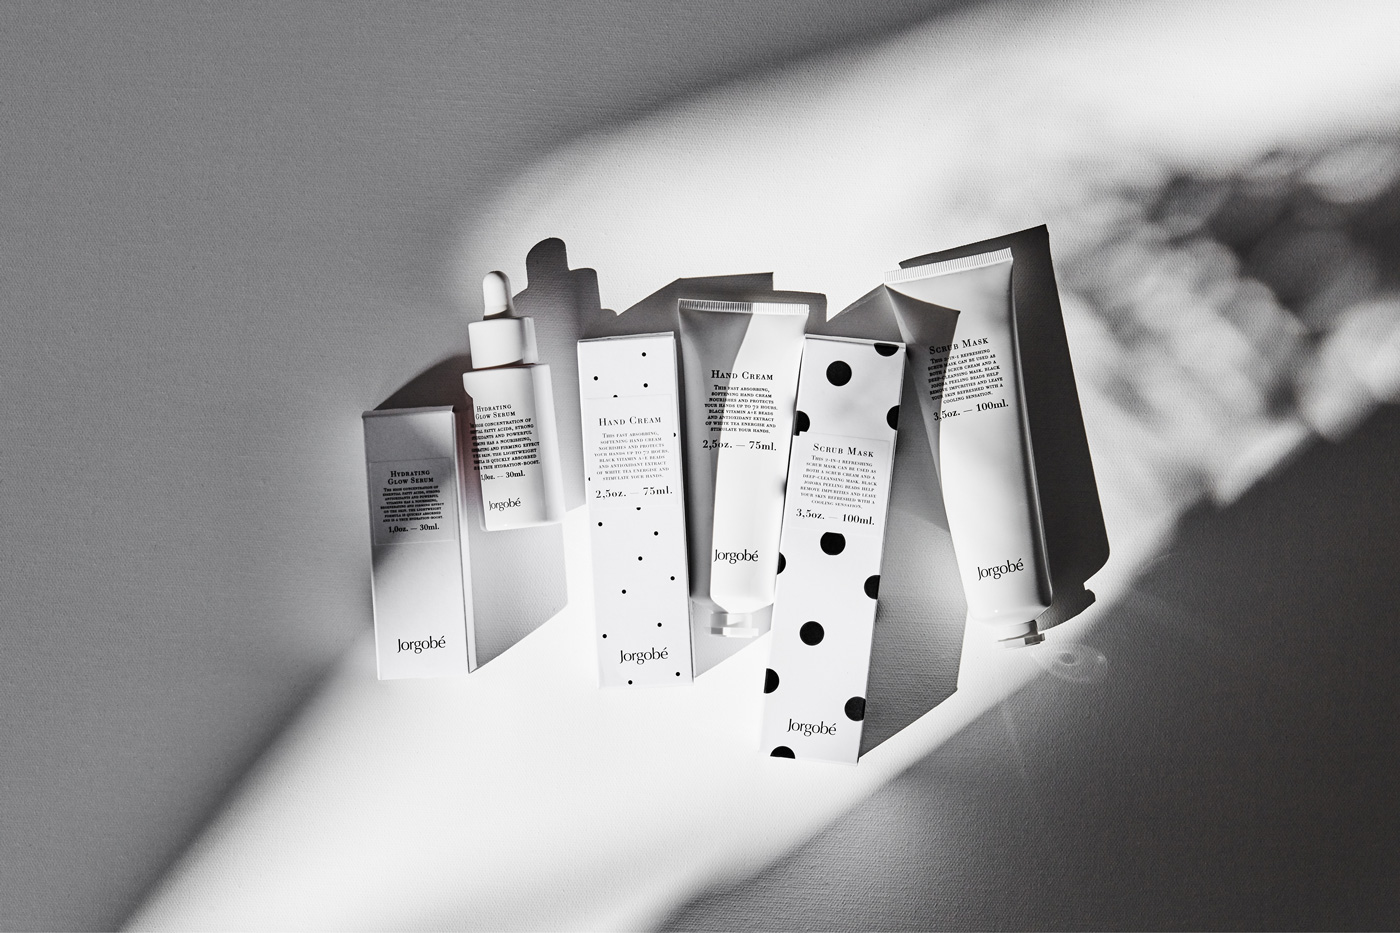 Jorgobé skincare – Still life packaging collection